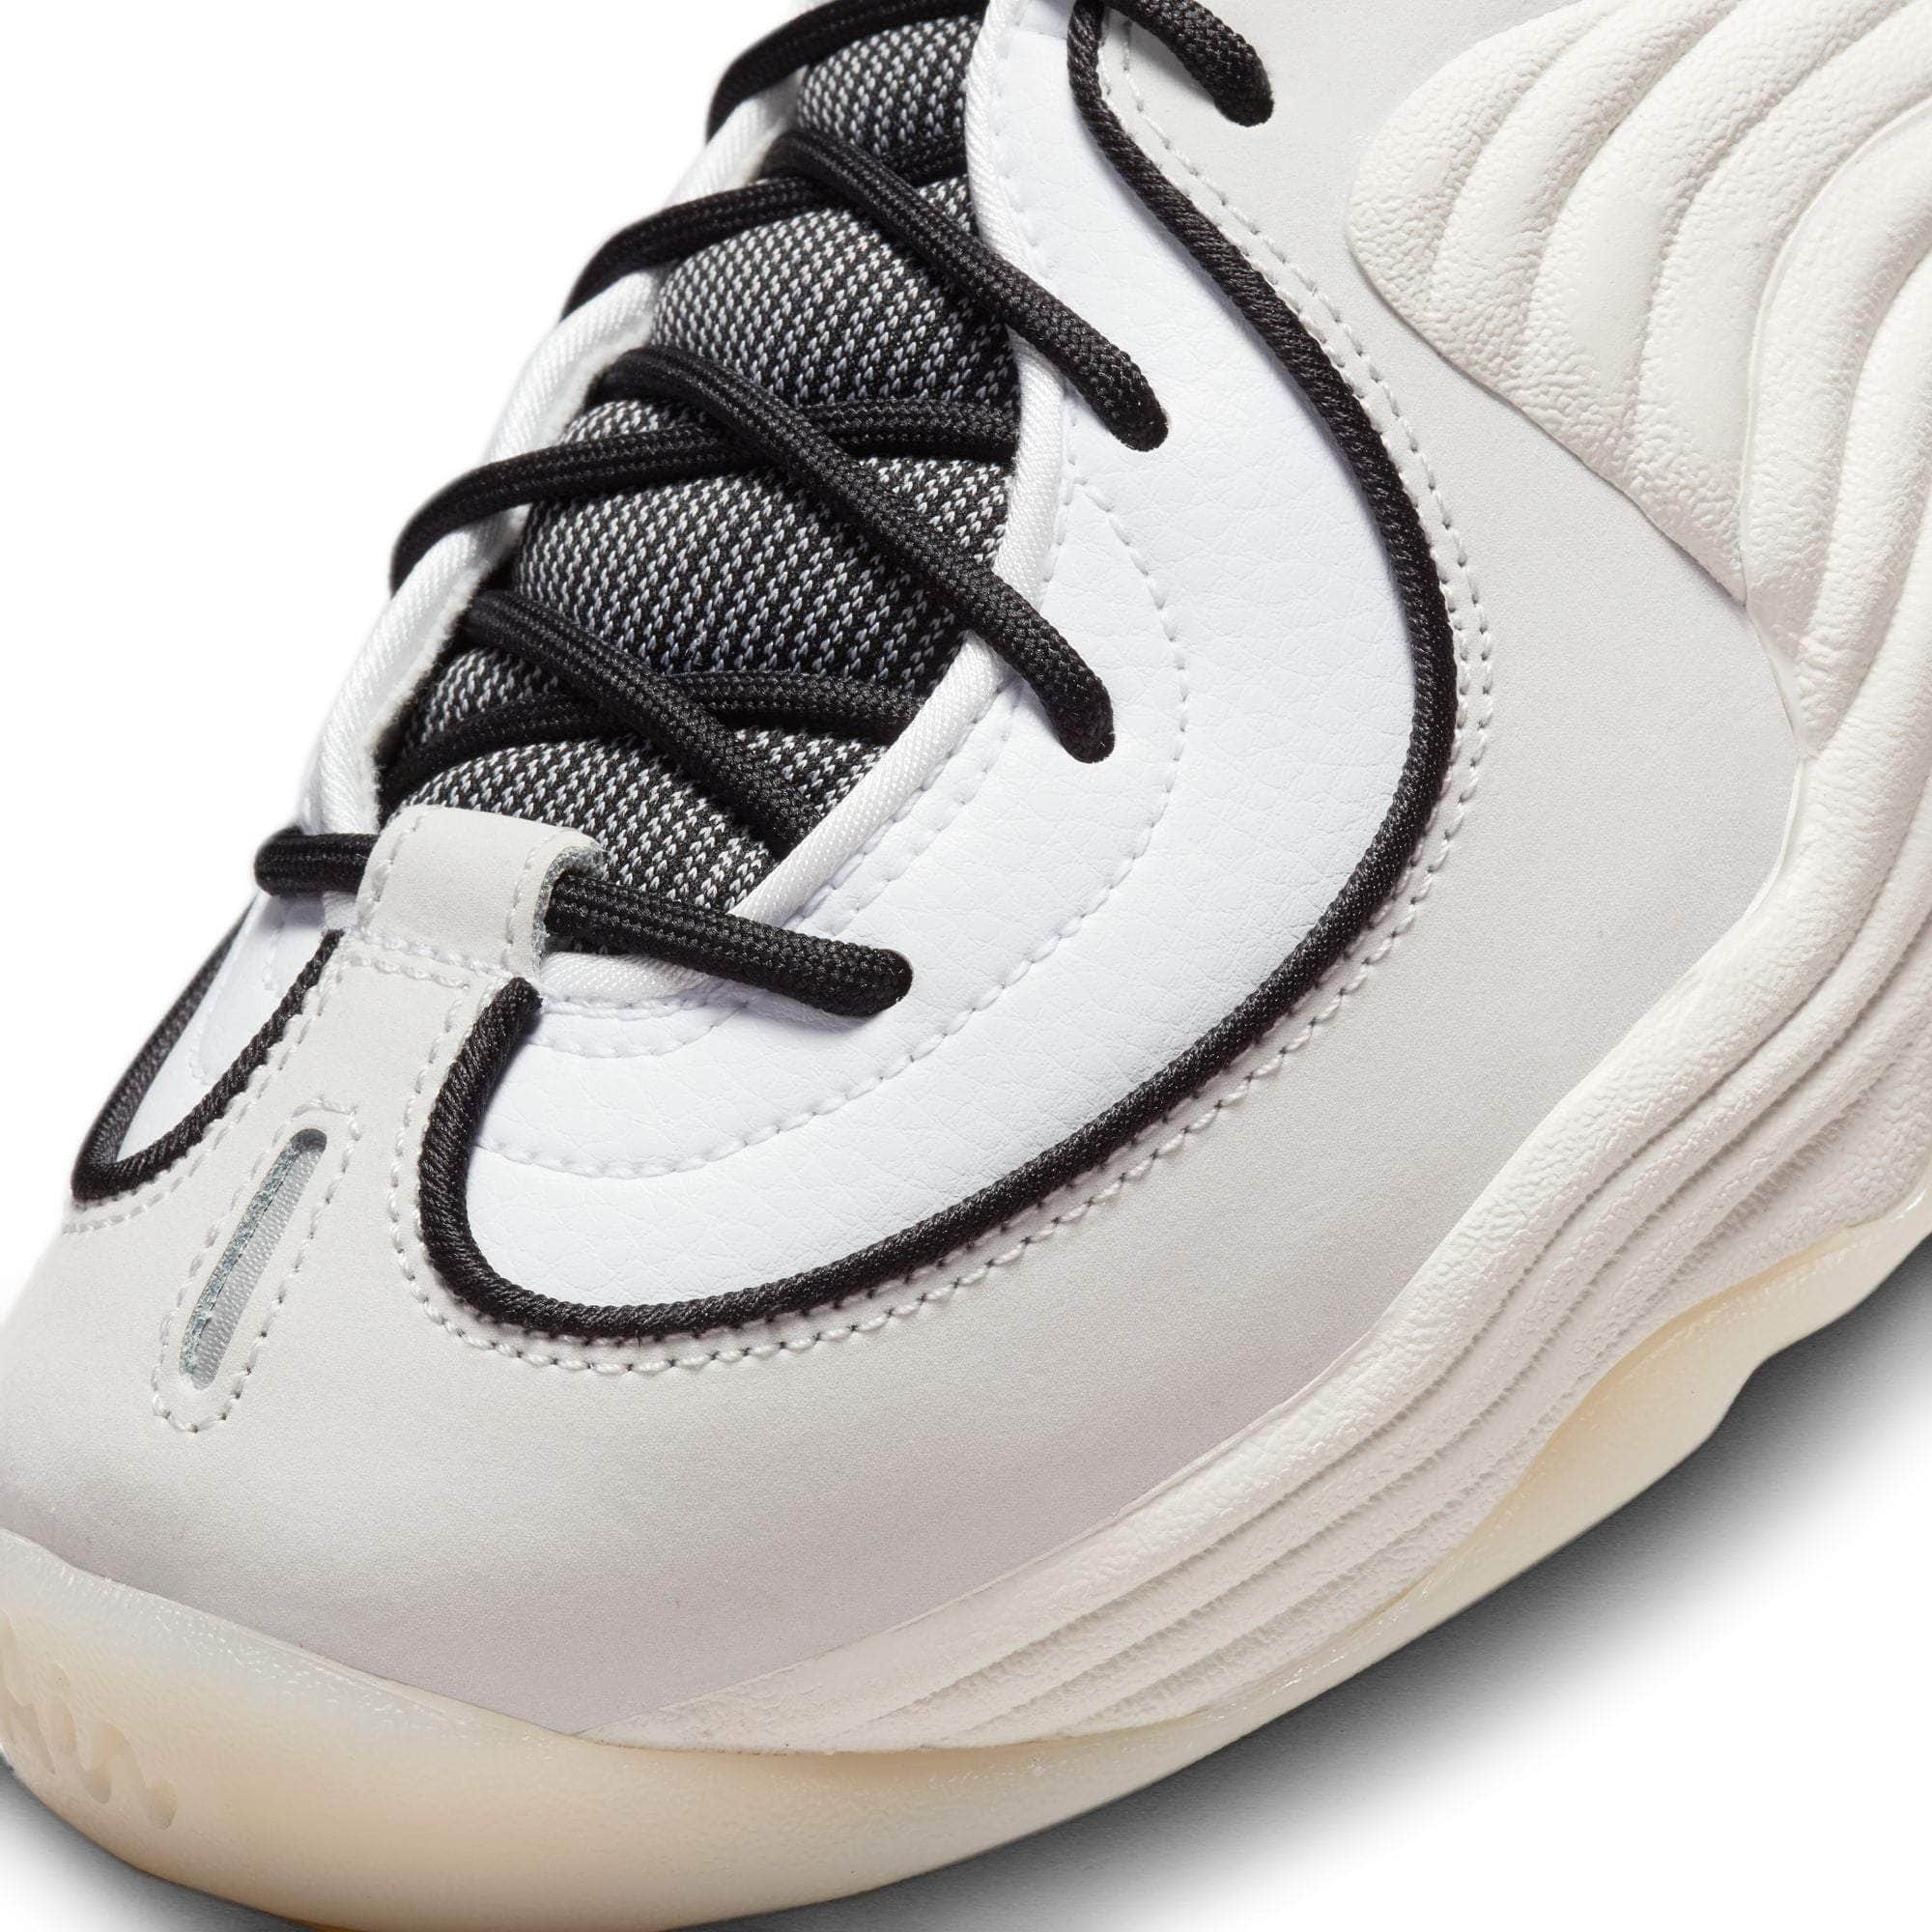 Nike Air Penny 2 Men's Shoes